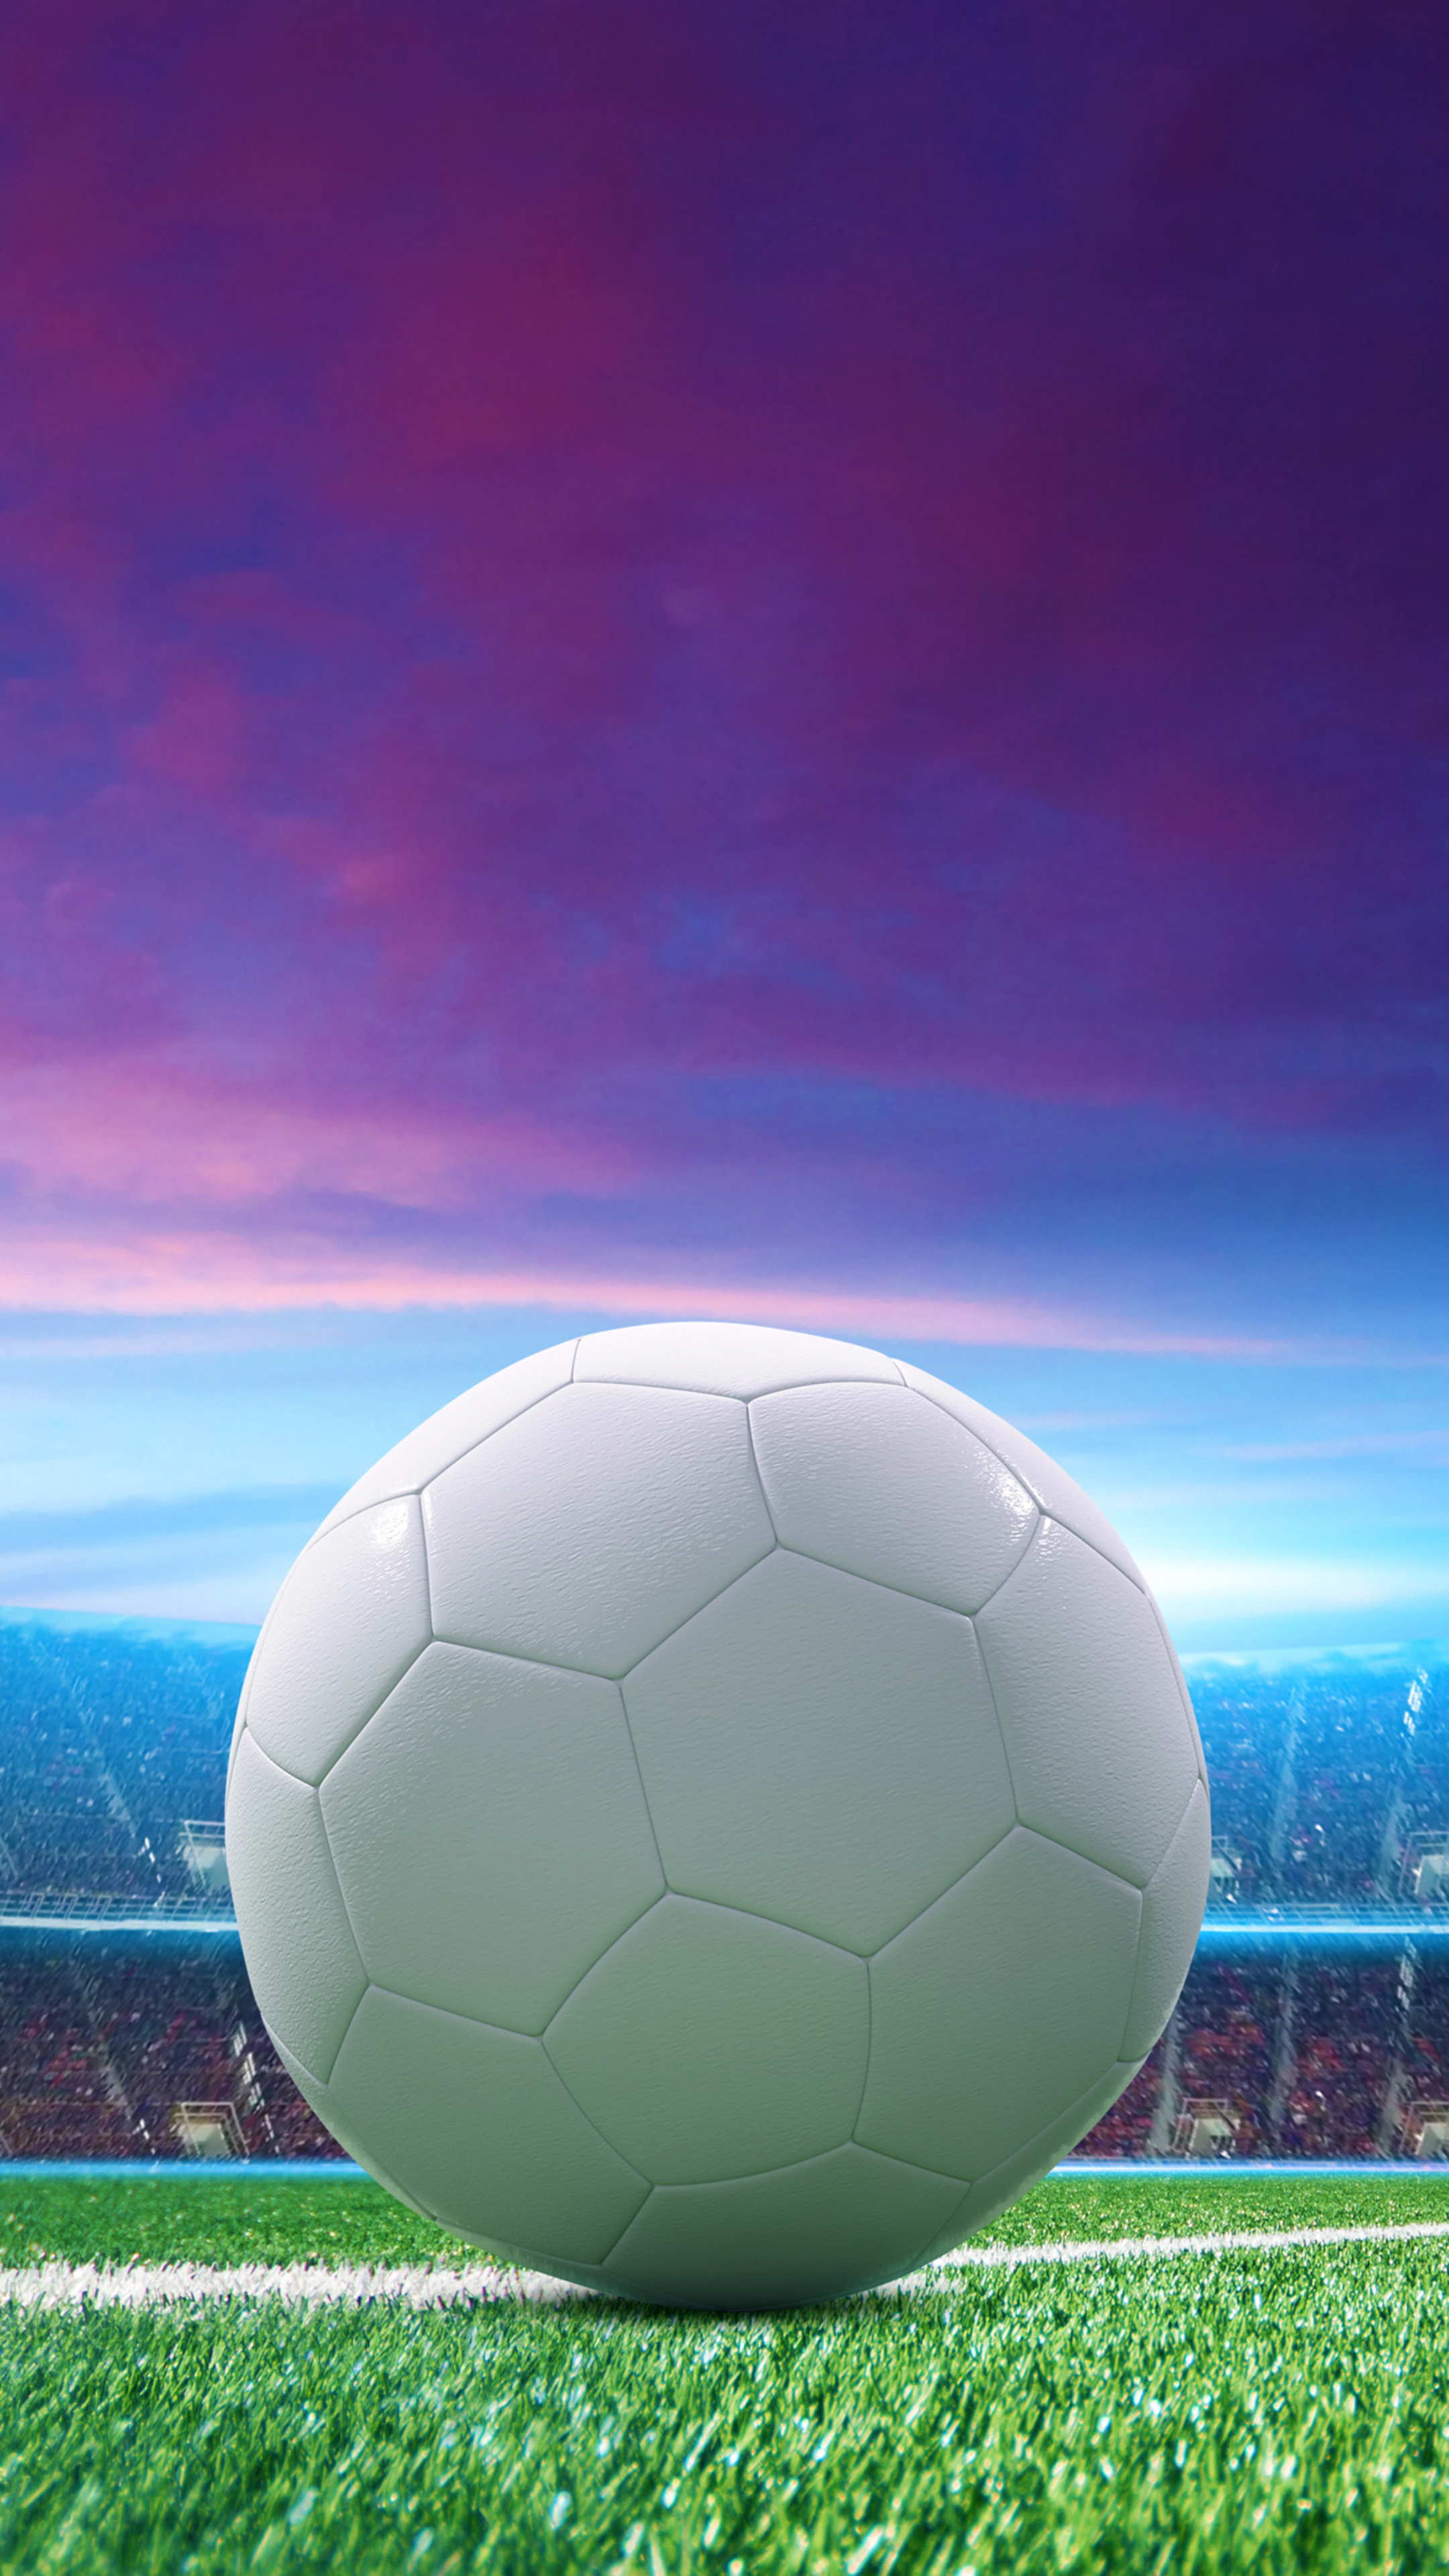 Football stadium 4K, Sony Xperia, Premium image quality, Spectator experience, 2160x3840 4K Handy